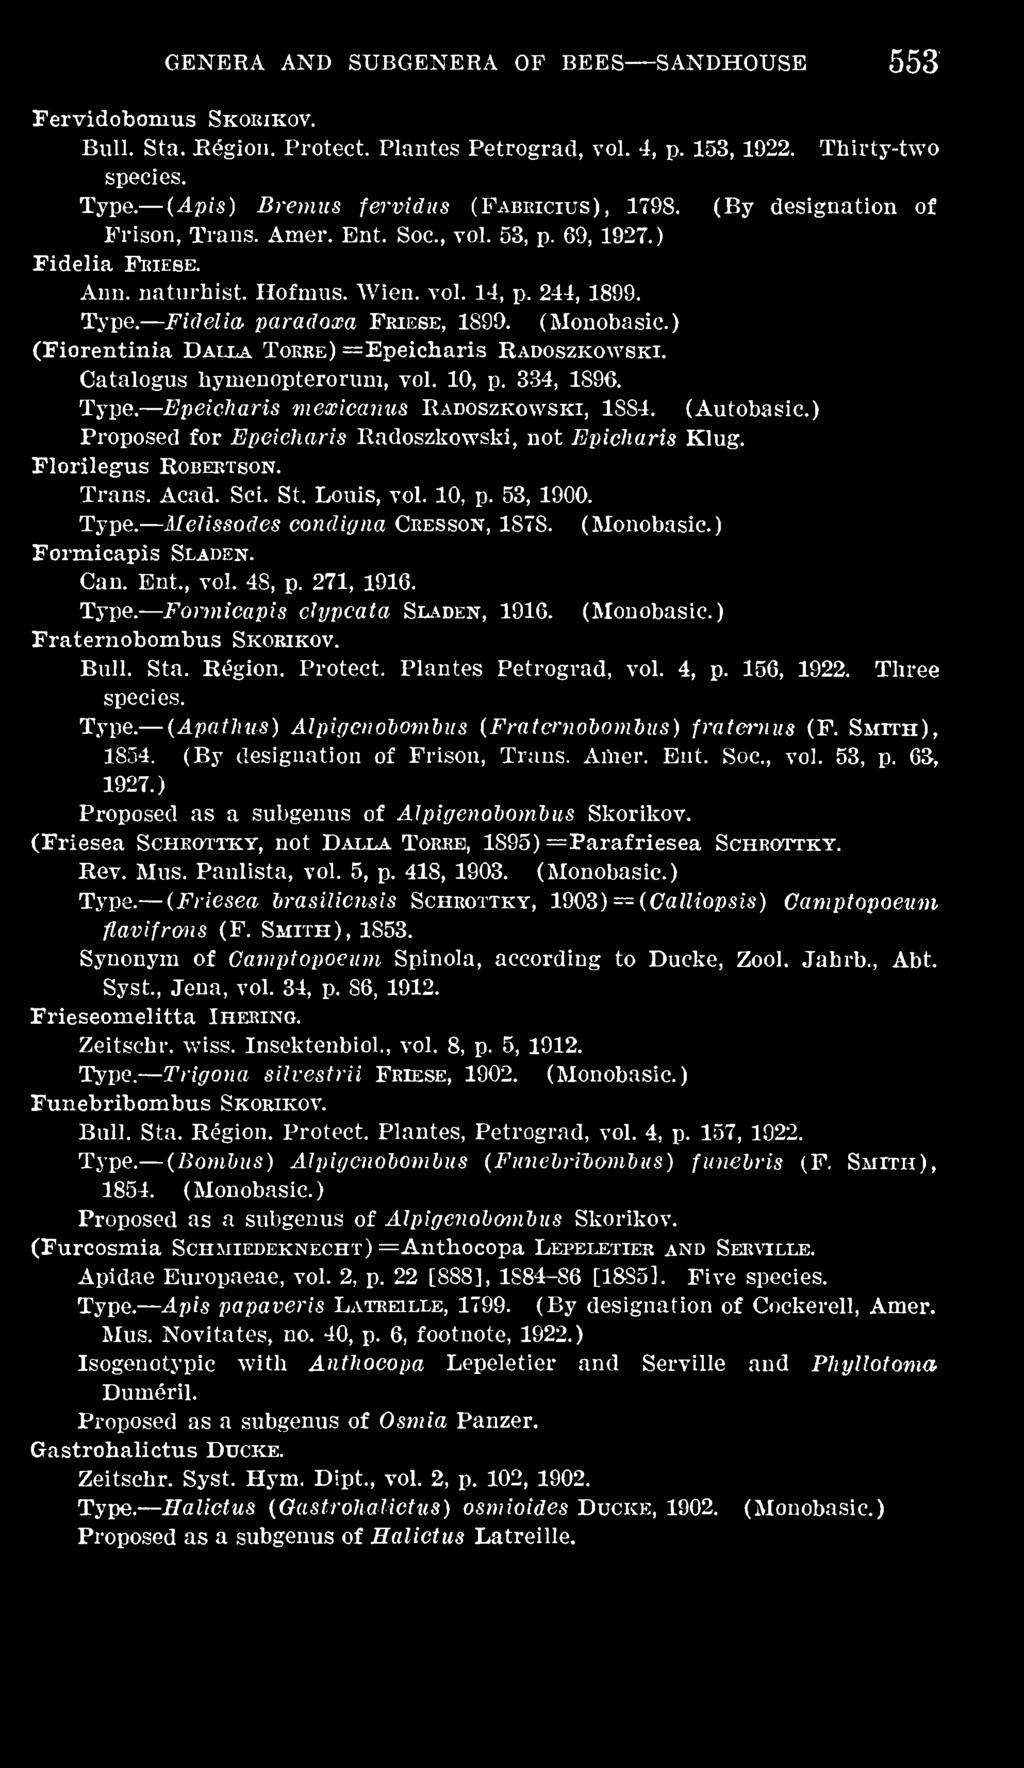 ) Can. Ent., vol. 48, p. 271, 1916. Formicapis clypeata Sladen, 1916. (Monobasic.) Fraternobombus Skorikov. Bull. Sta. Region. Protect. Plantes Petrograd, vol. 4, p. 156, 1922. Three species.